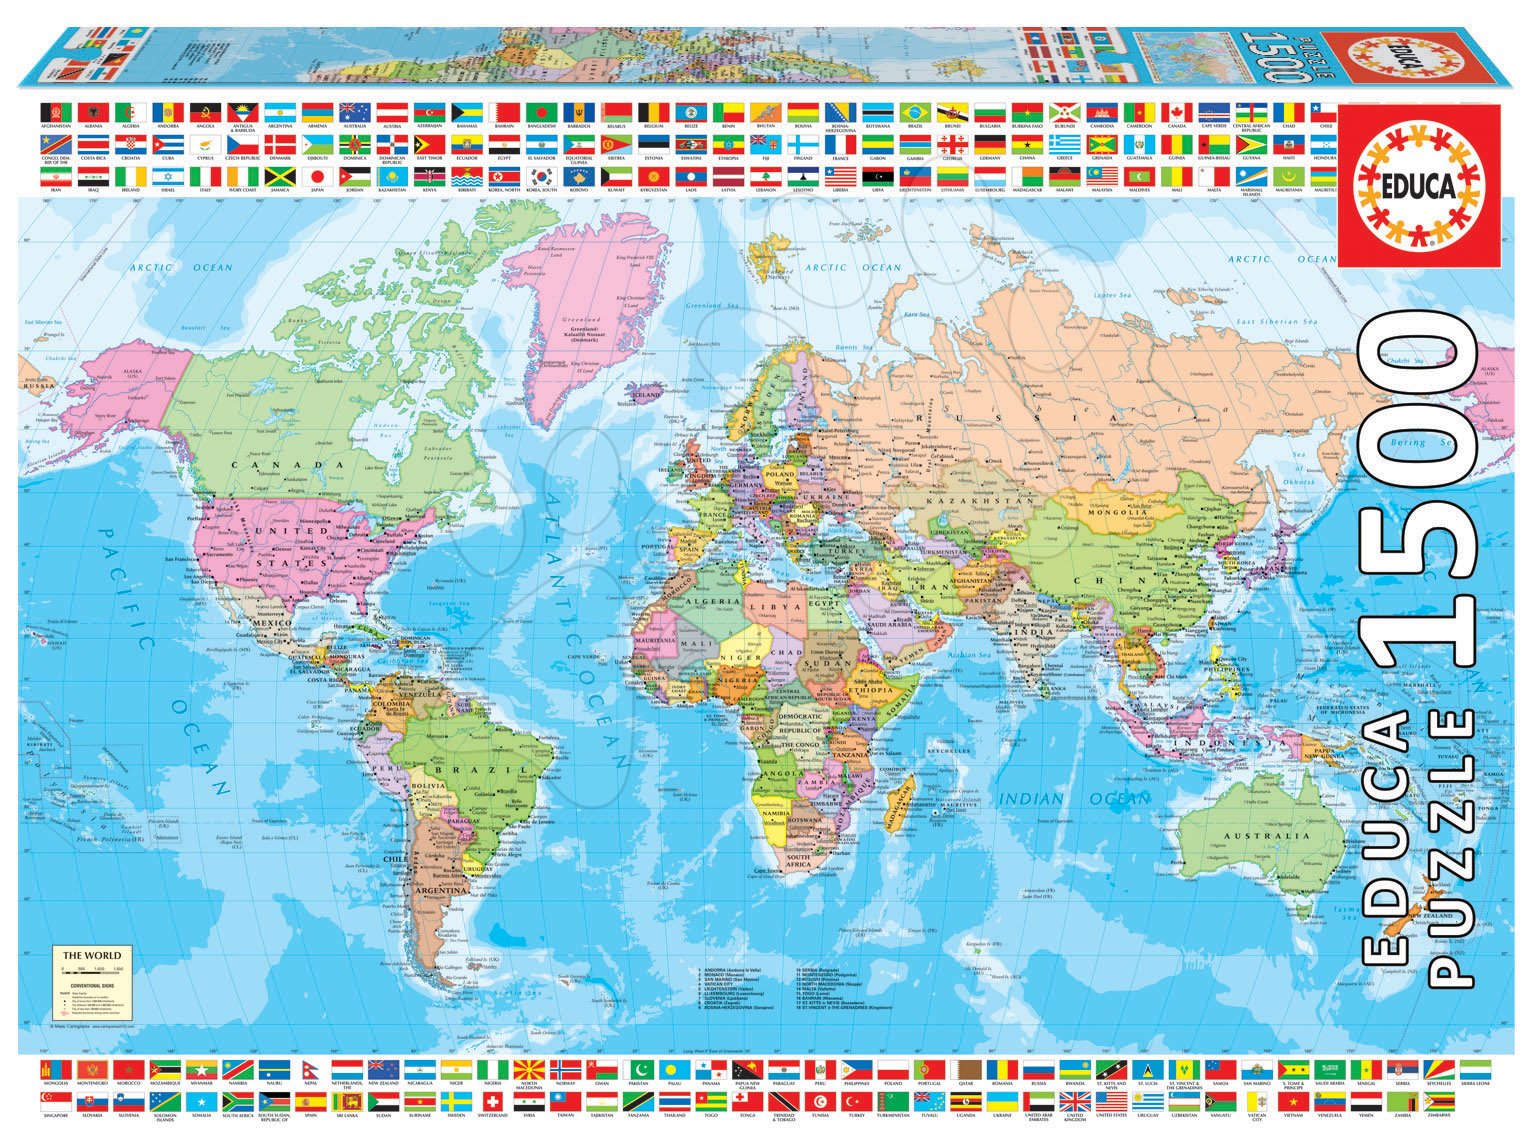 Puzzle Political Worldmap Educa 1500 dielov a Fix lepidlo od 11 rokov